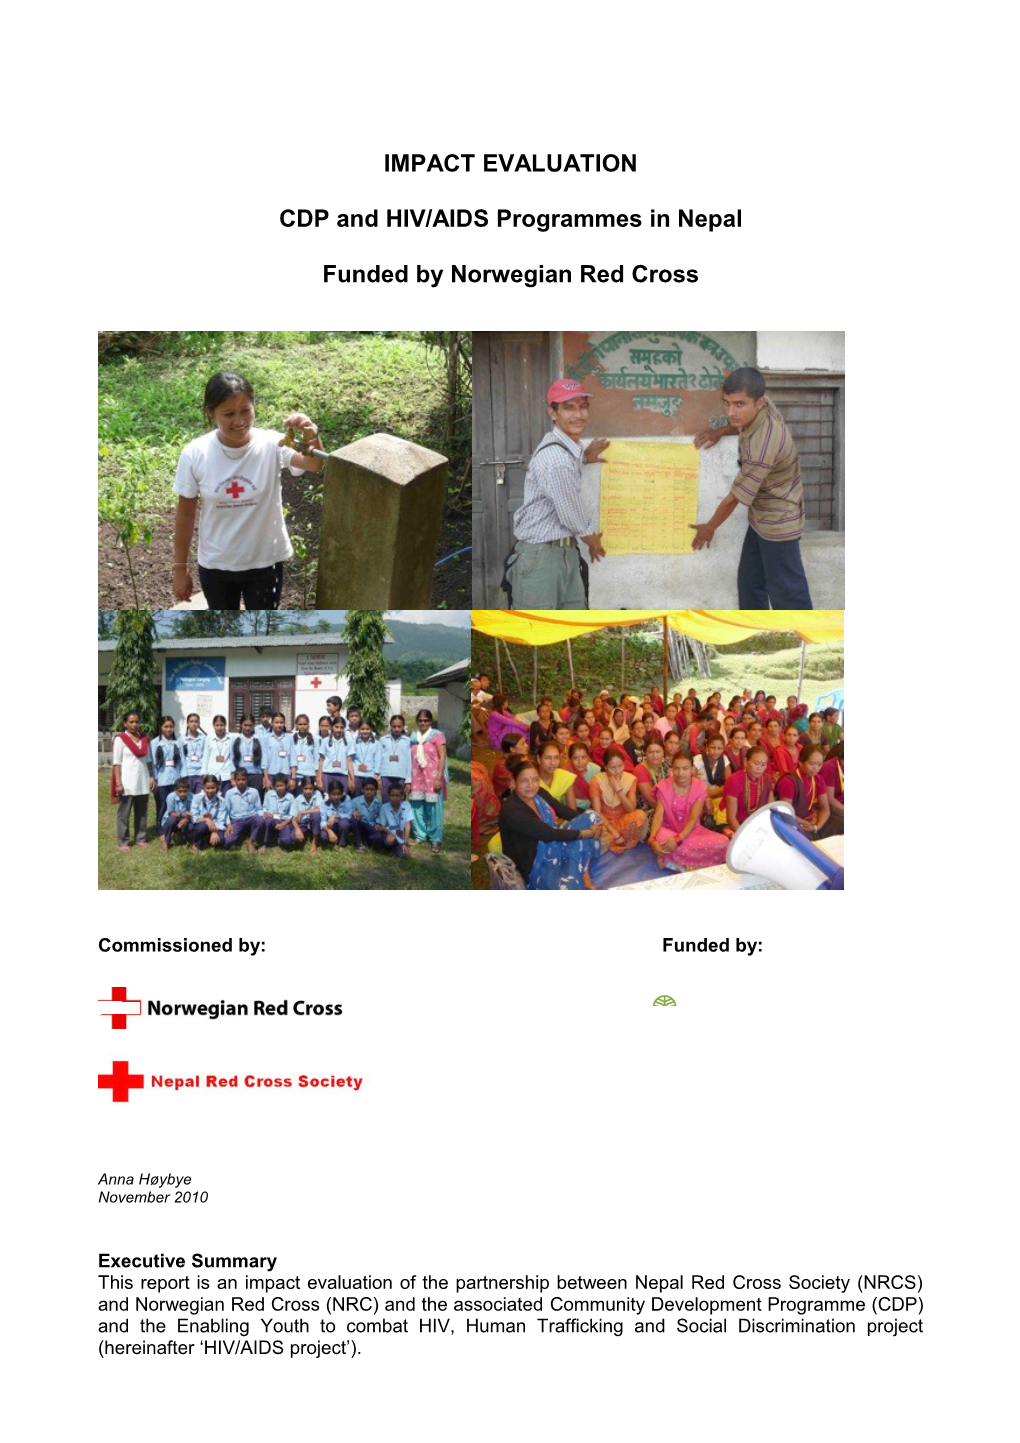 Impact Evaluation Report: NRCS / NRC Partnership and Associated Programmes s1